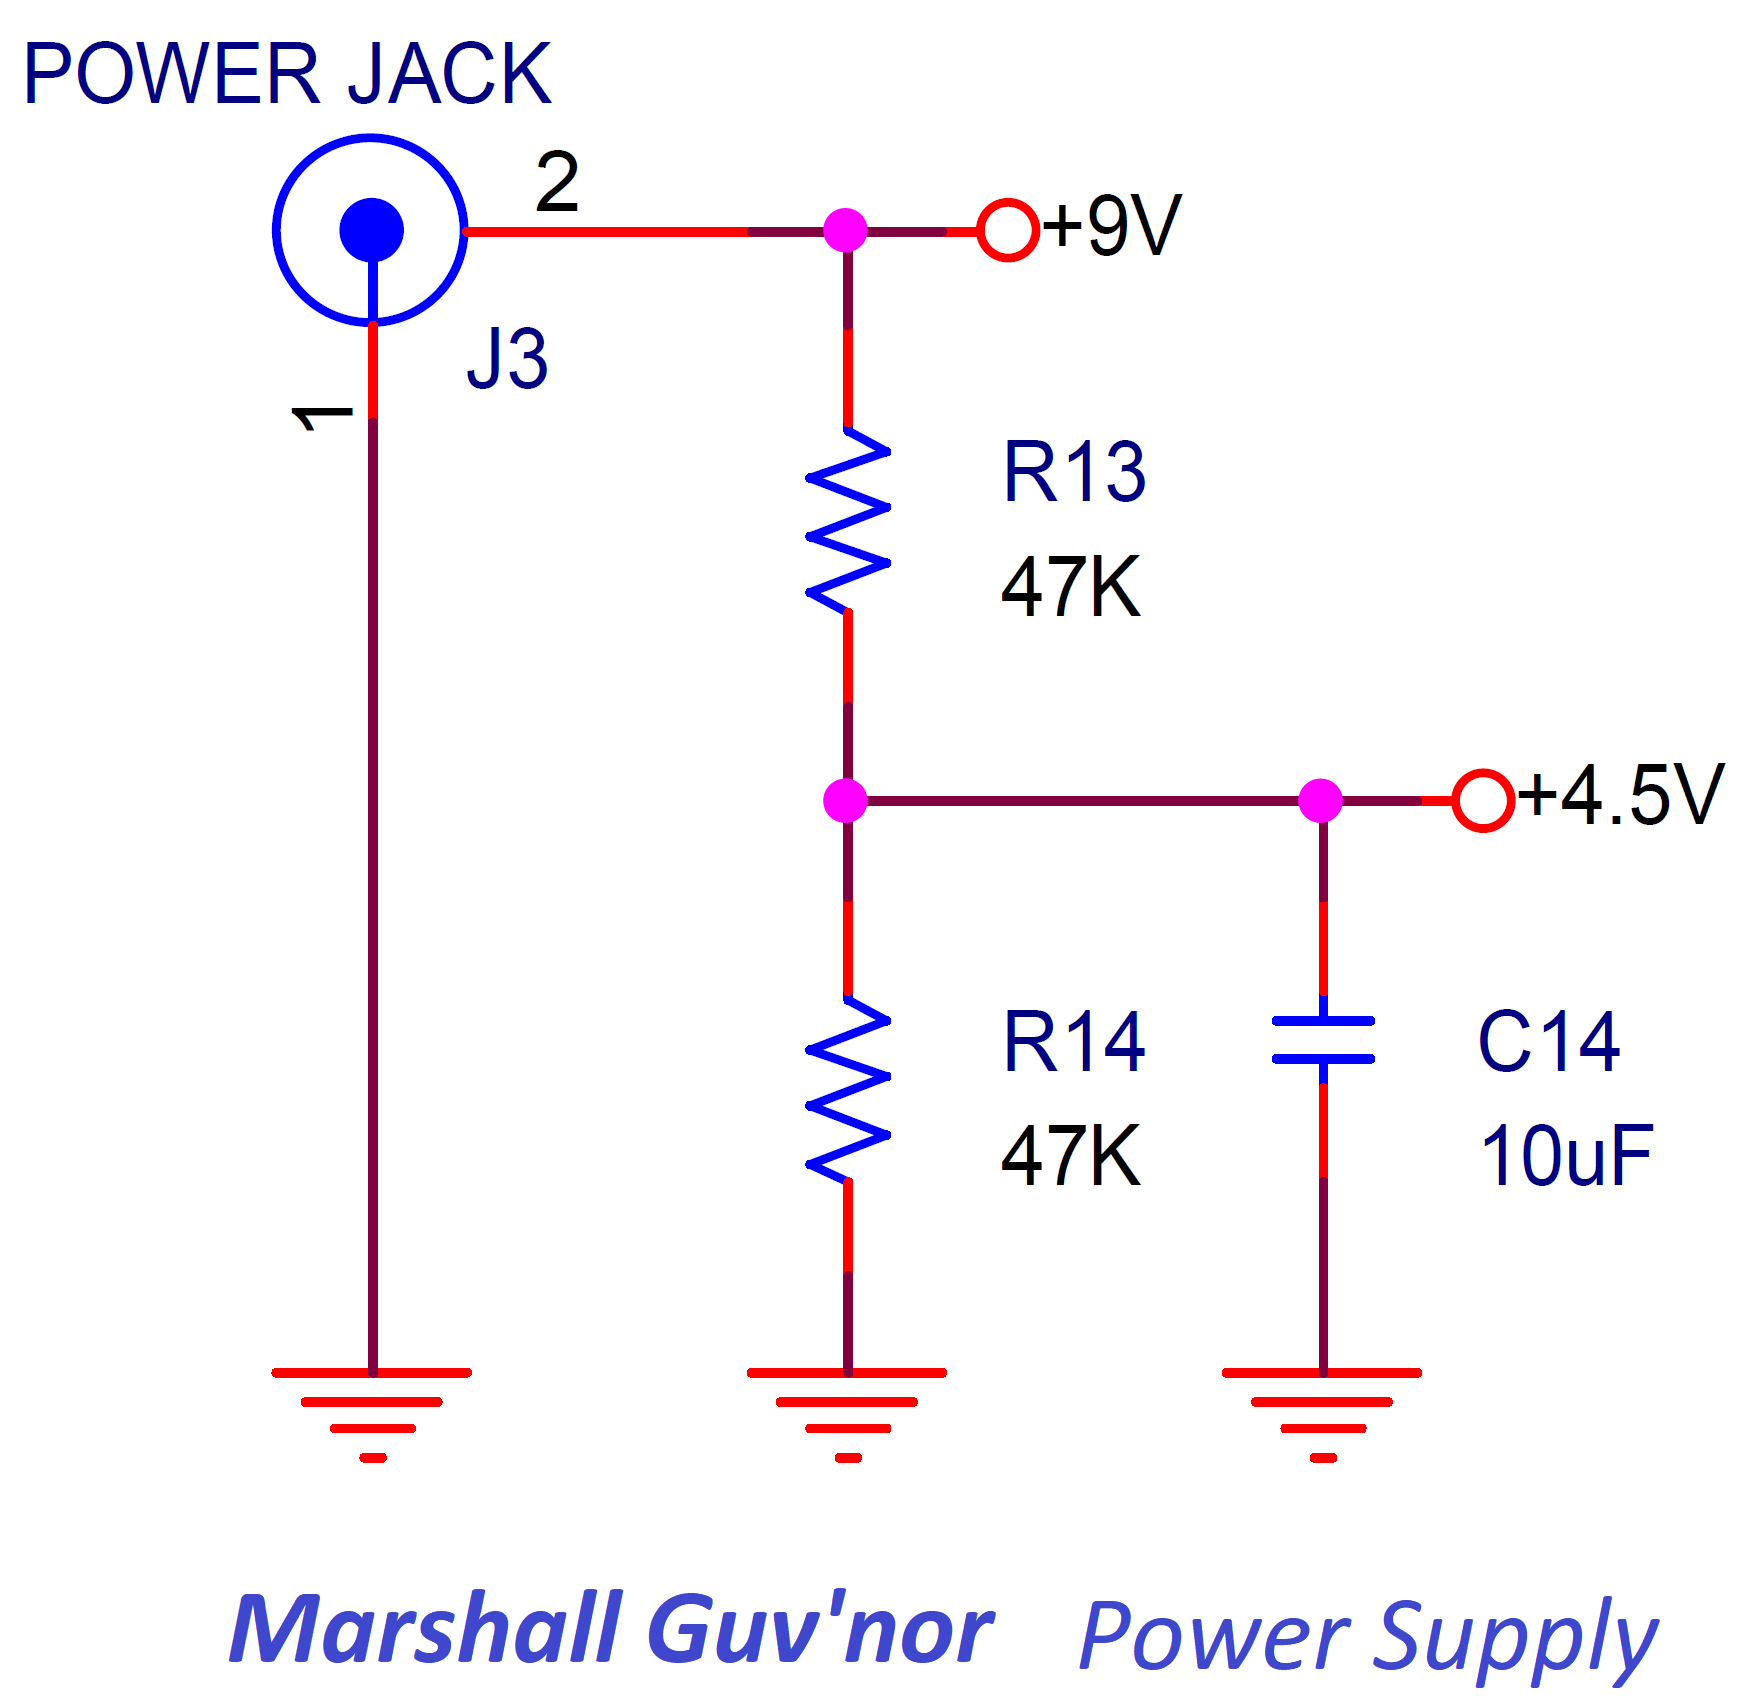 marshall guvnor power supply circuit